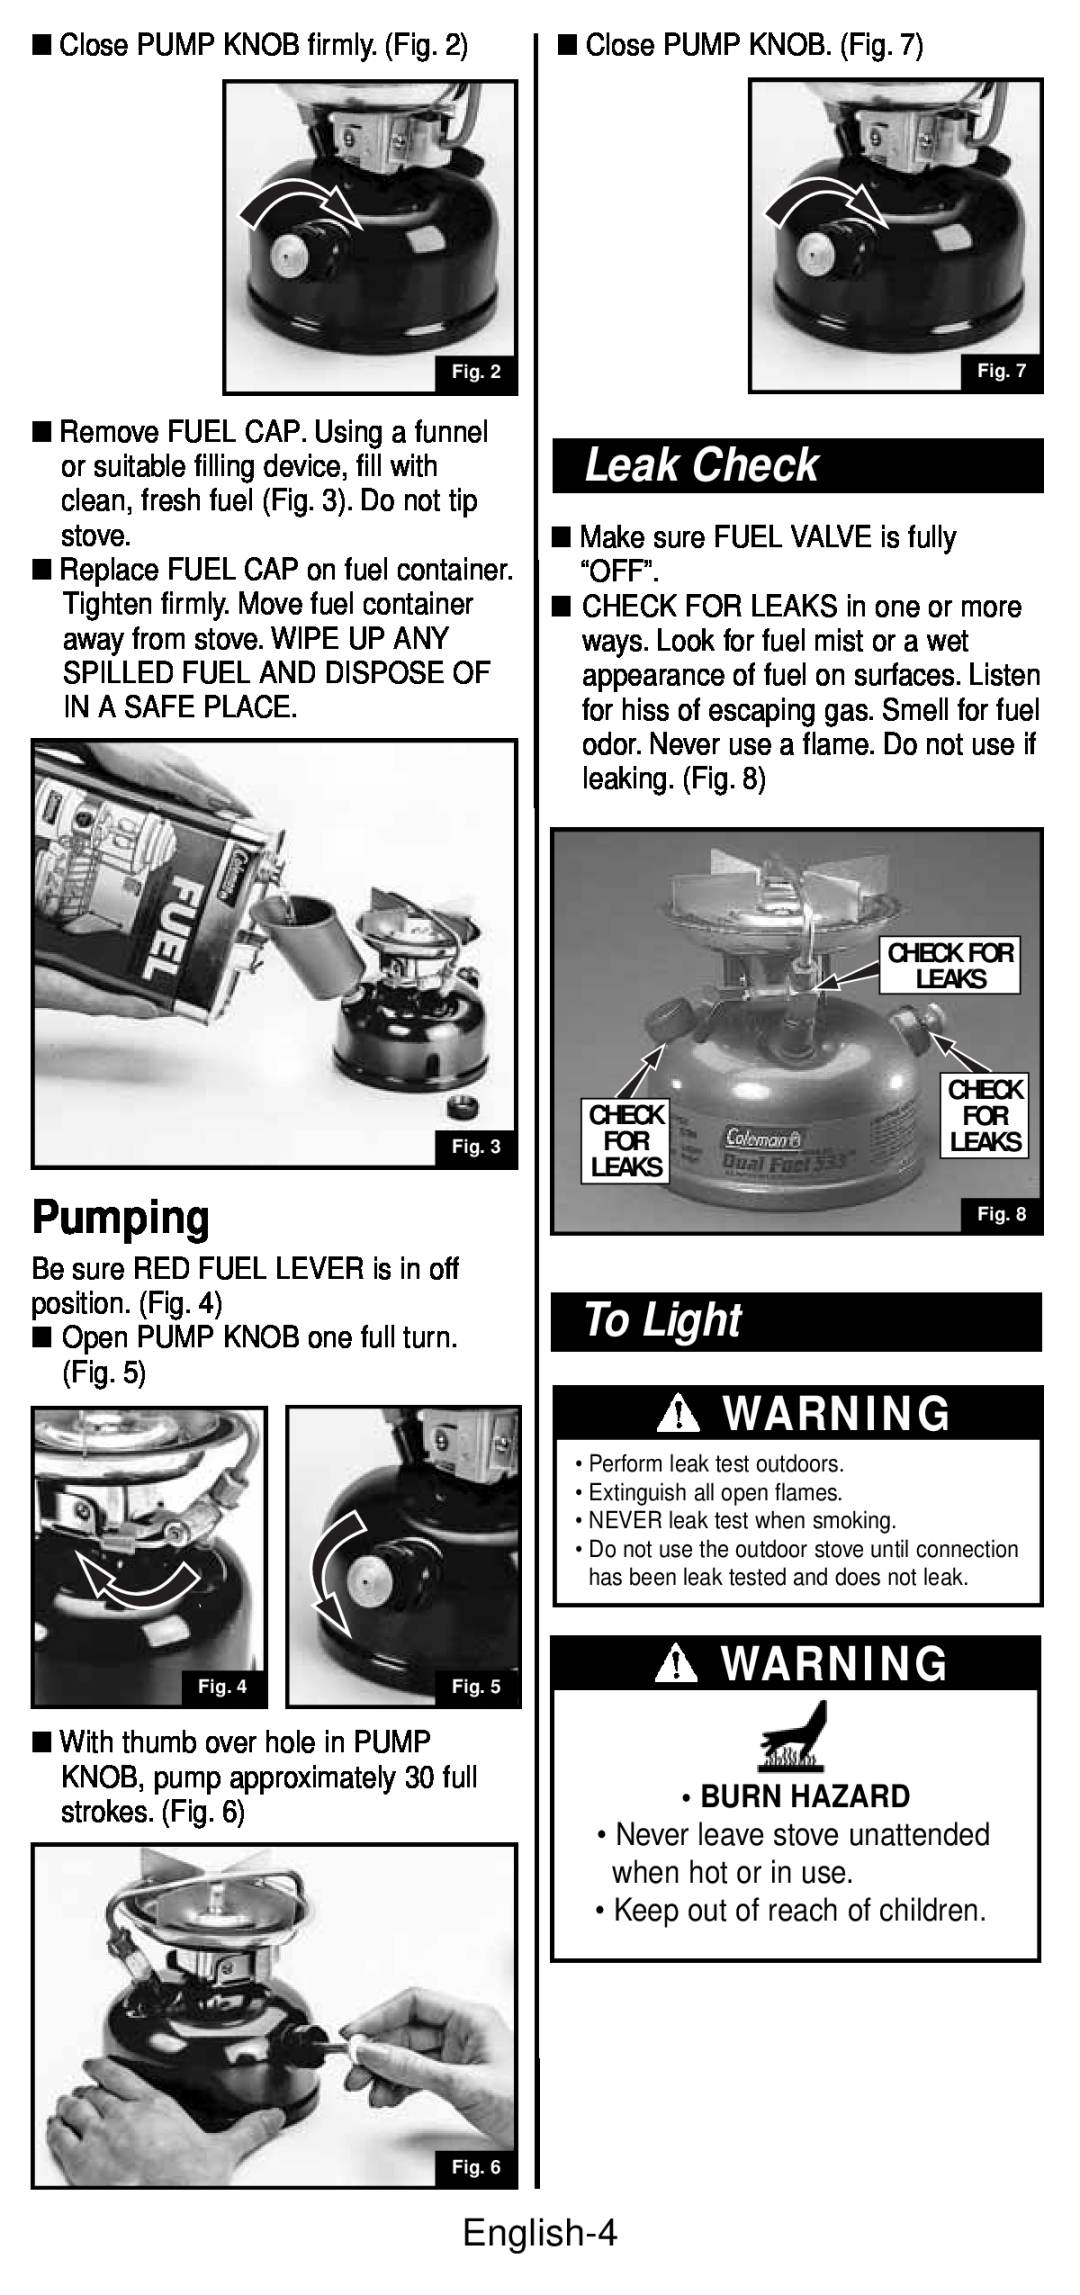 Coleman 533 Series instruction manual Pumping, Leak Check, To Light, English-4, Burn Hazard 